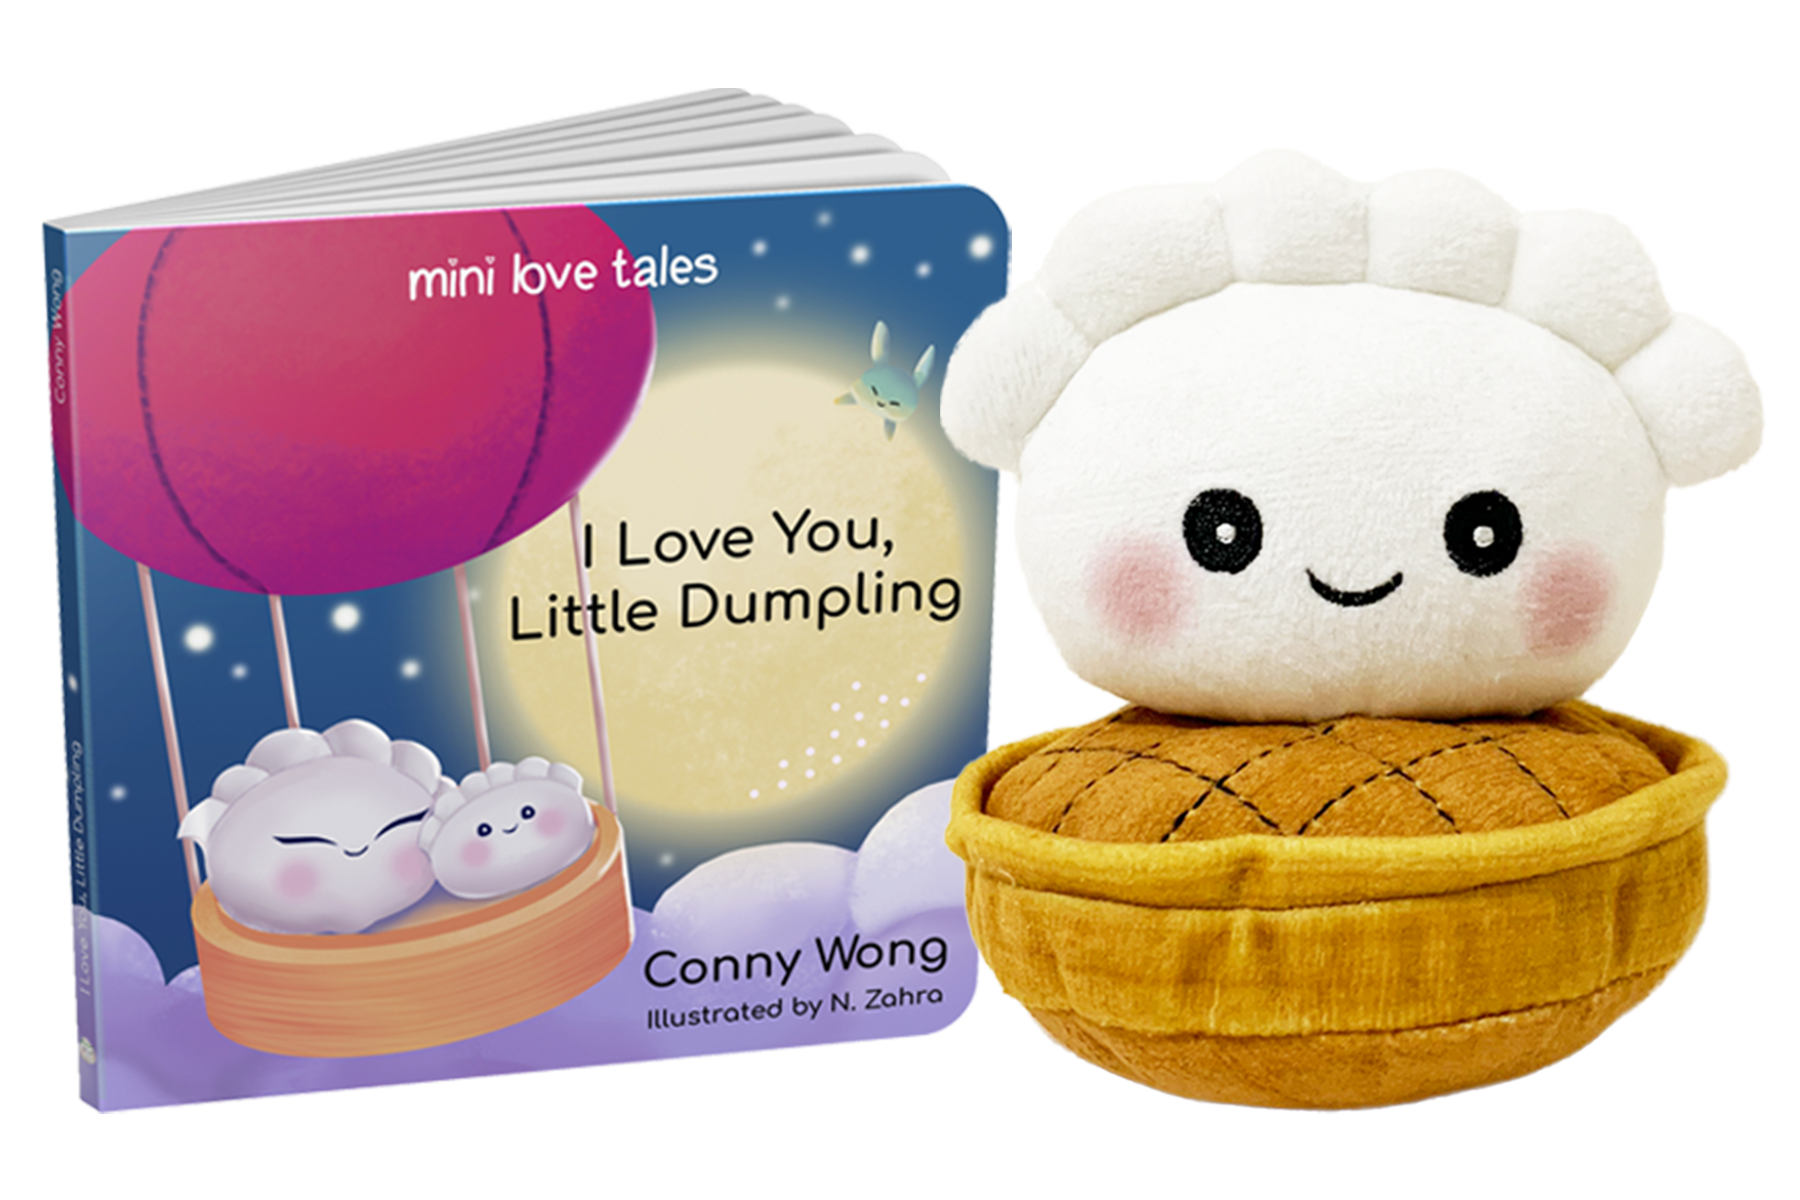 I Love You, Little Dumpling Book + Soft Toy Set